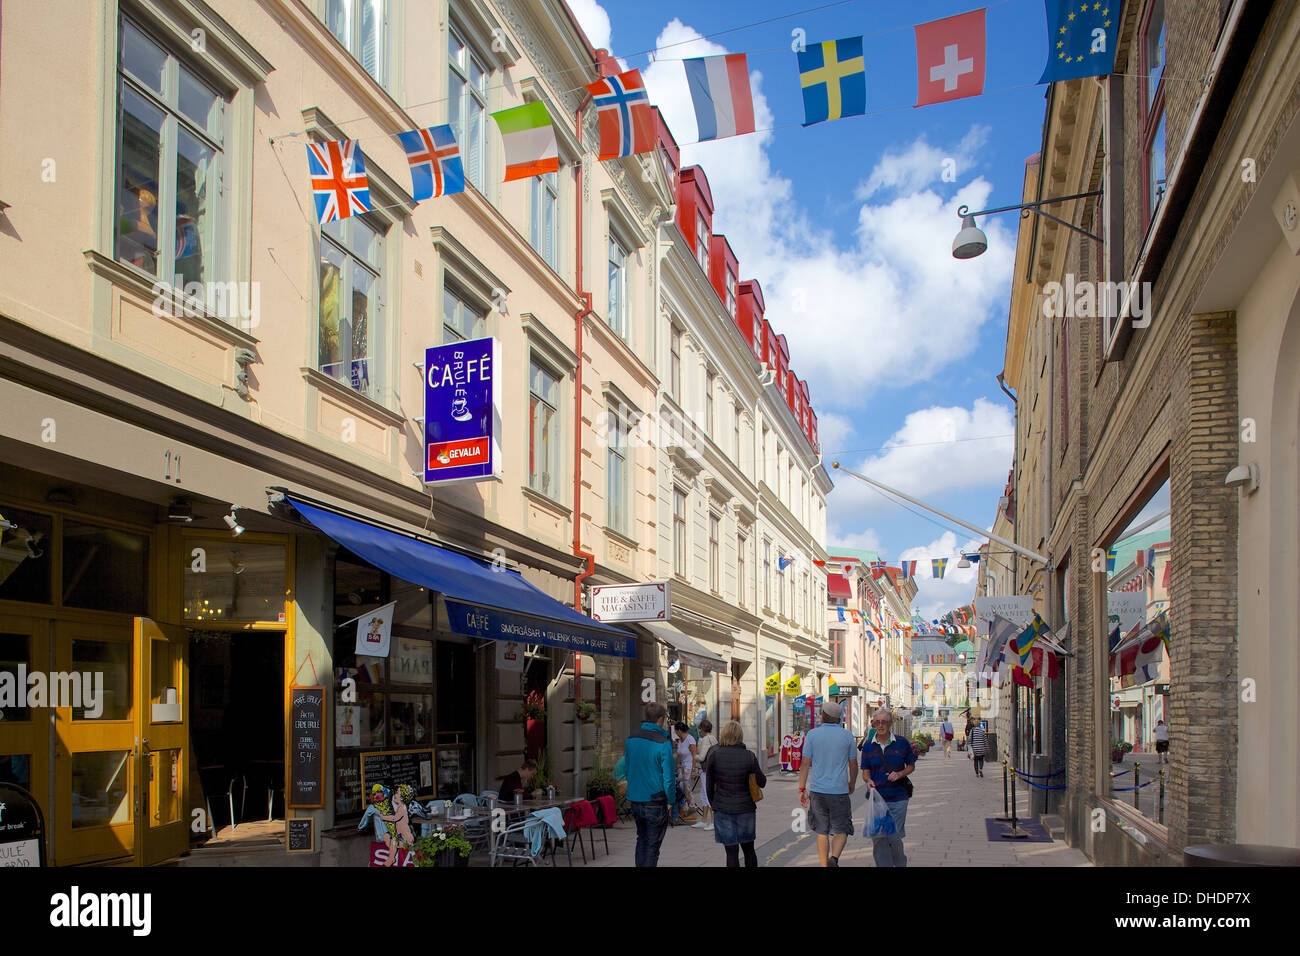 National flags and street scene, Gothenburg, Sweden, Scandinavia, Europe Stock Photo